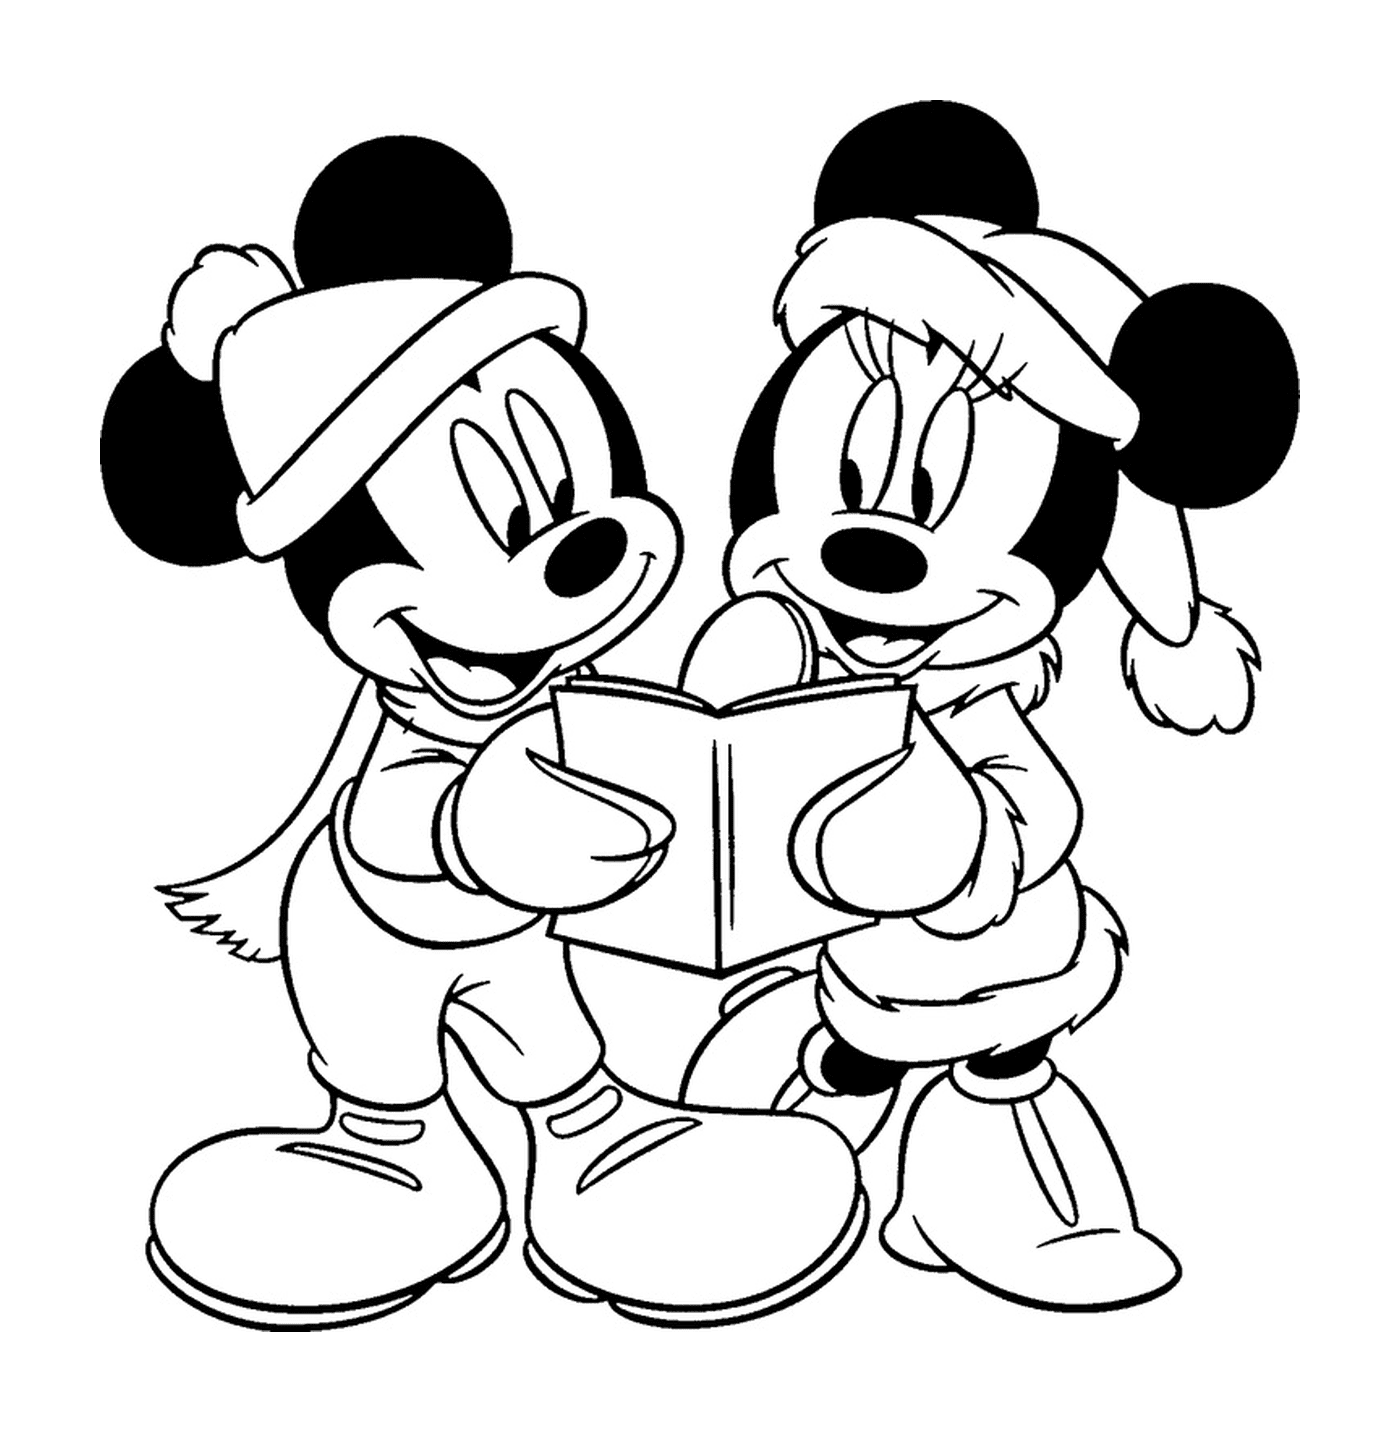  Mickey and Minnie read books 